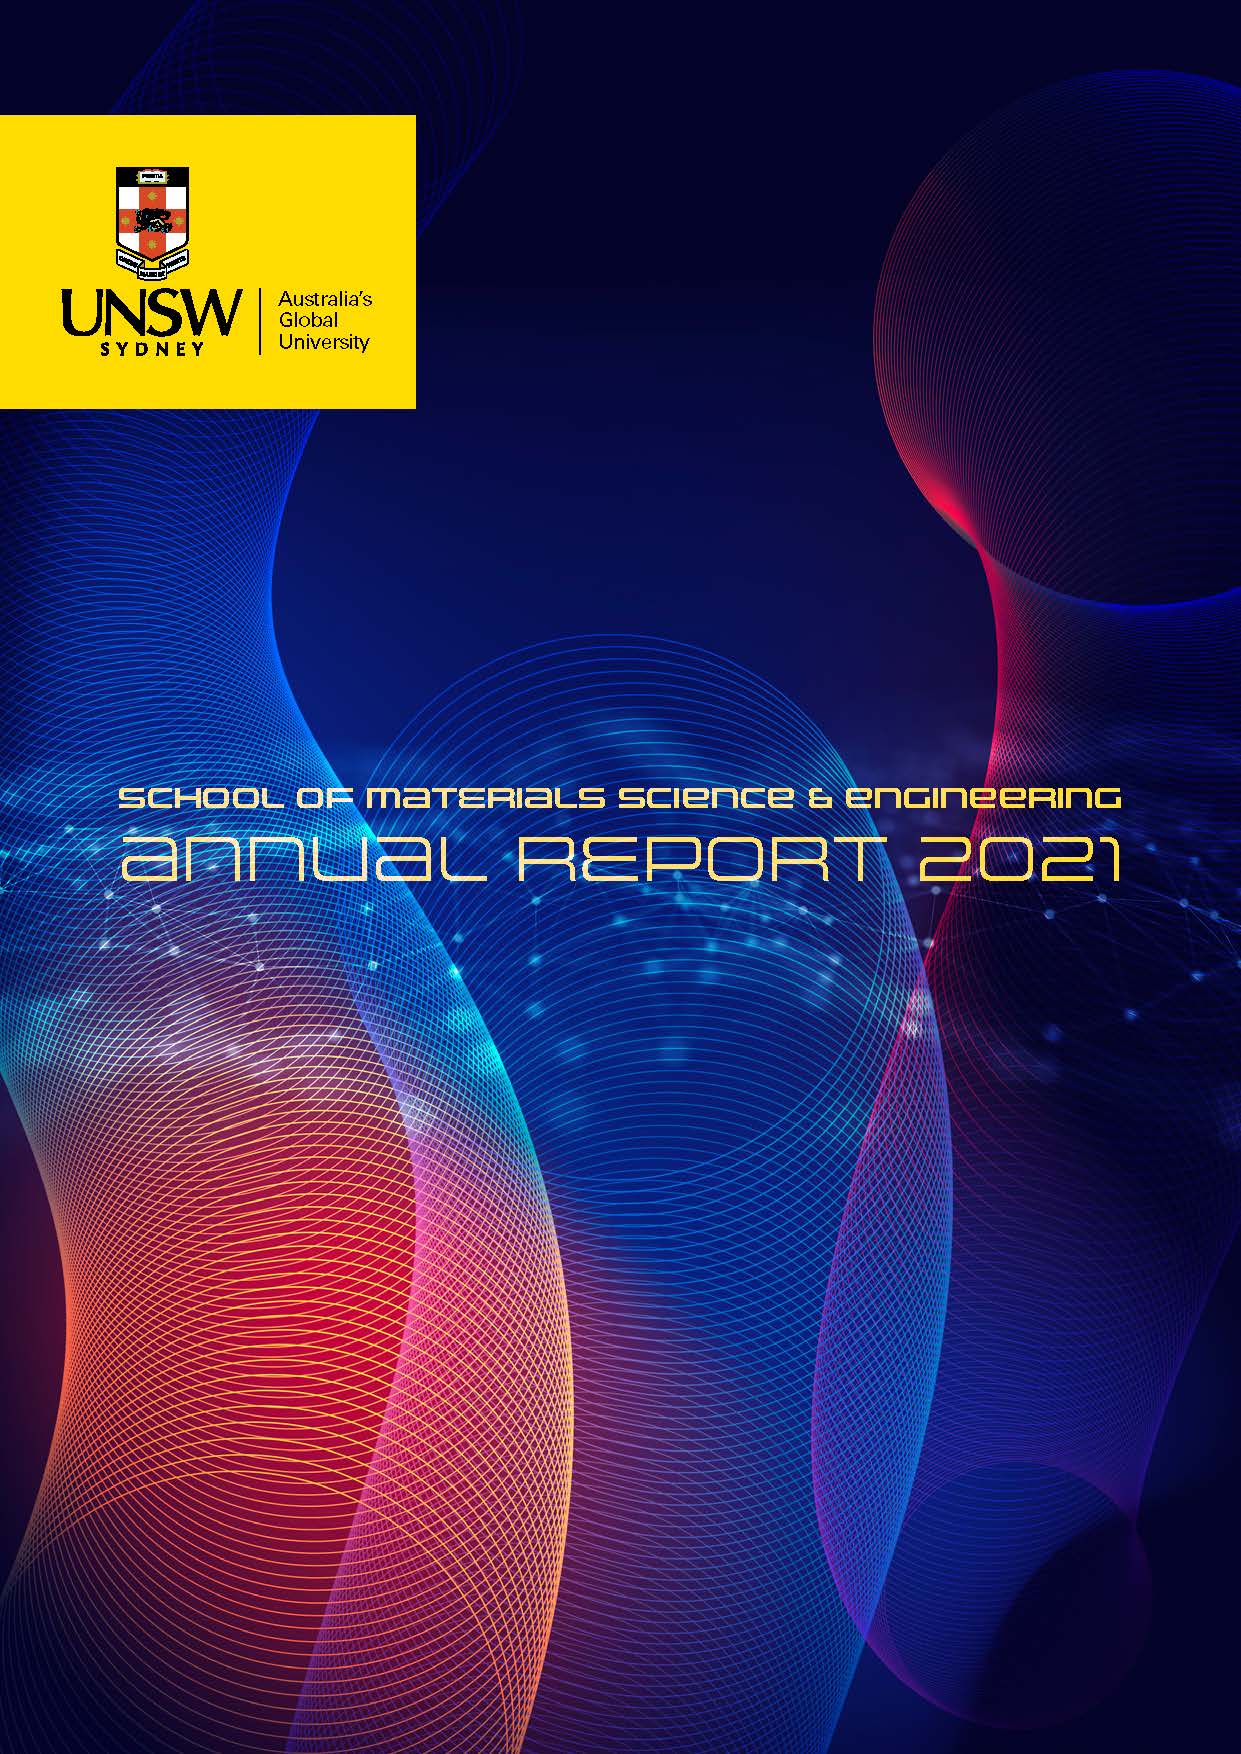 School Annual Report 2021 Cover Image